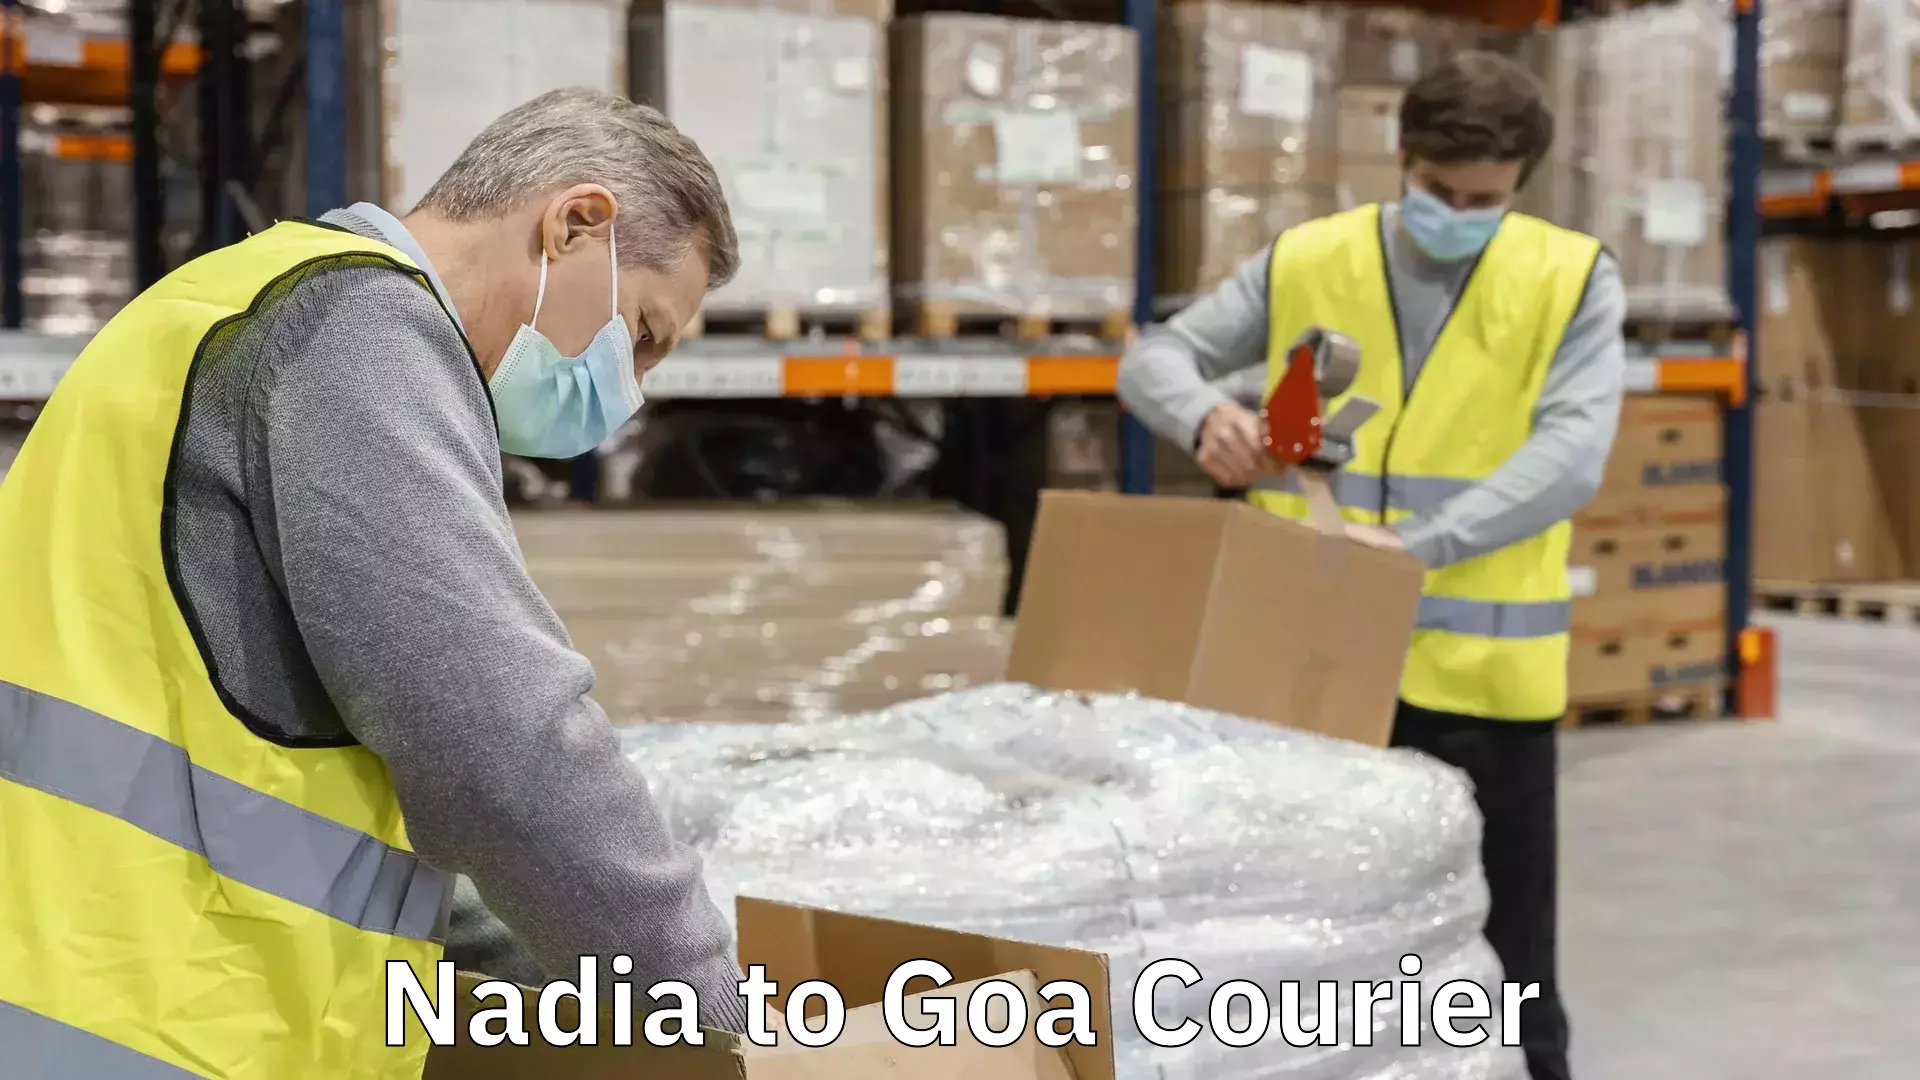 Doorstep delivery service Nadia to Goa